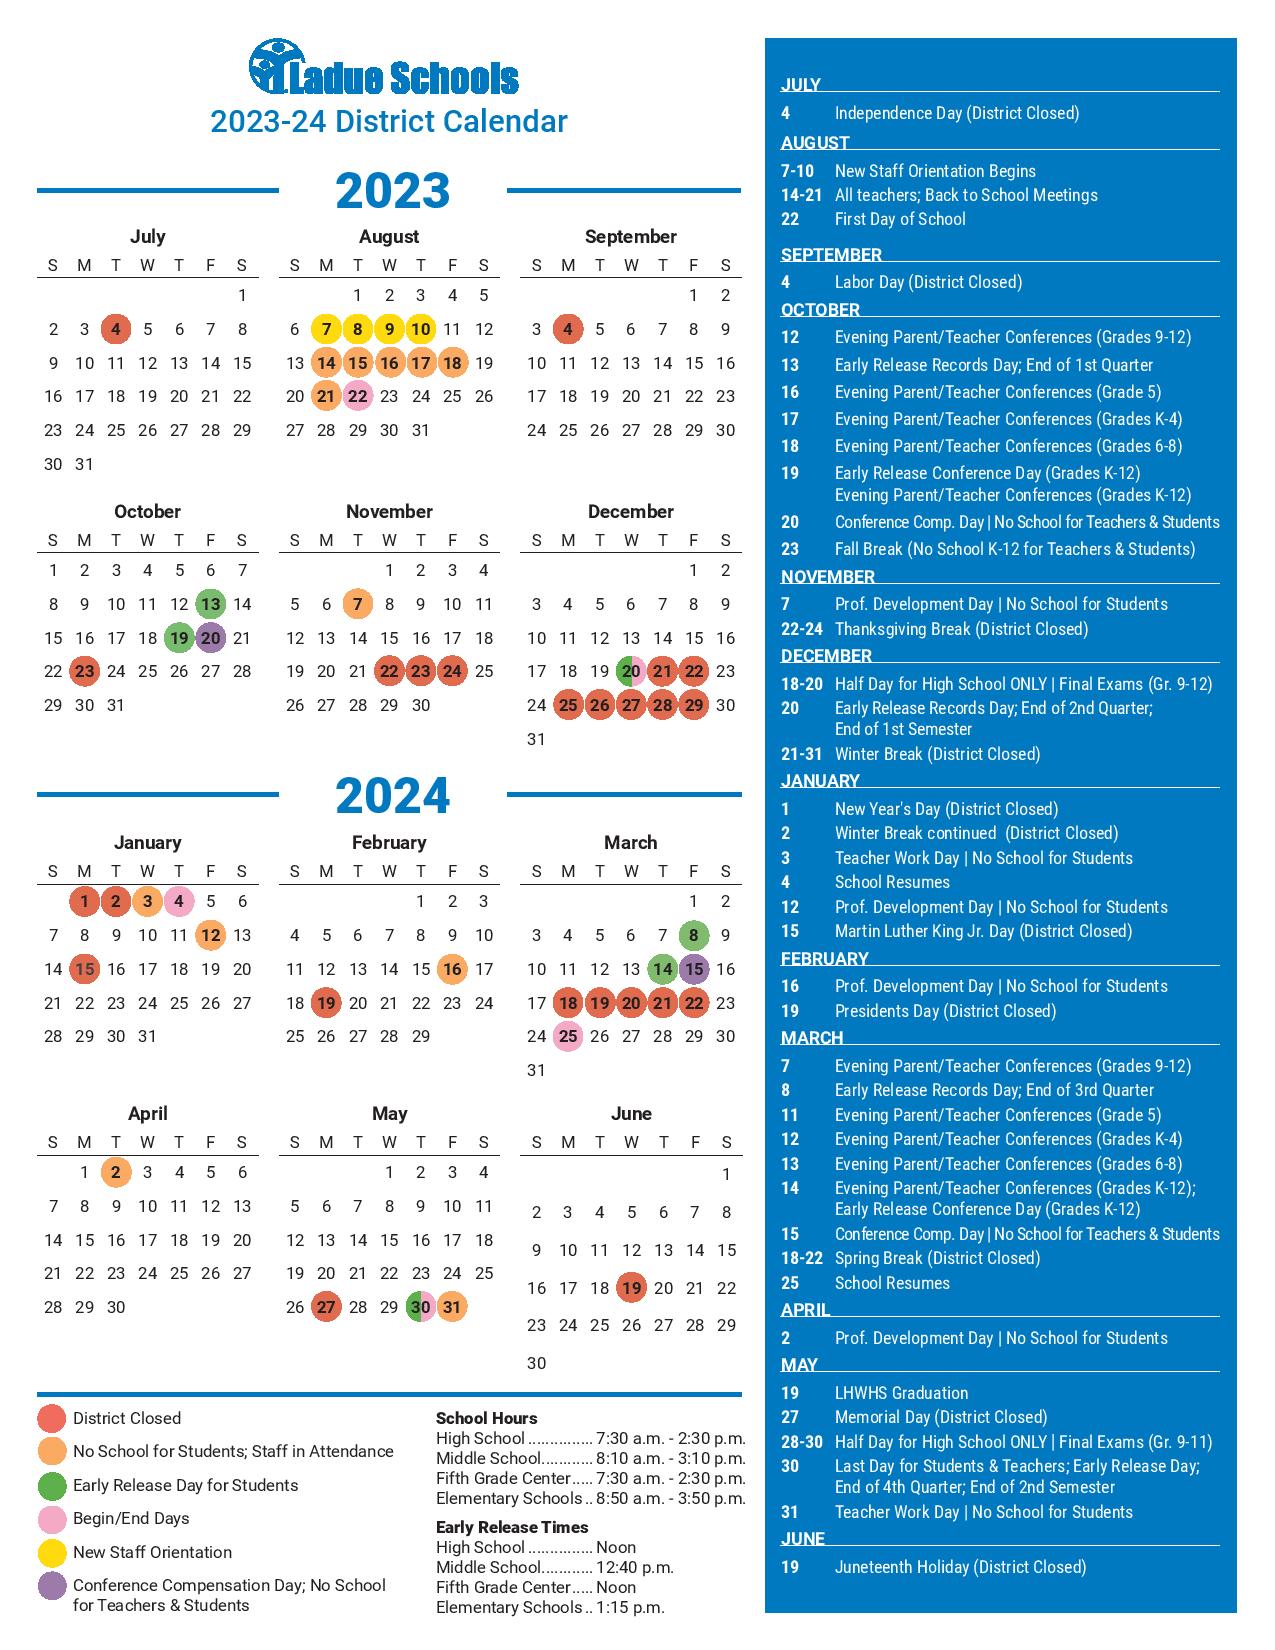 Ladue School District Calendar 2023 2024 in PDF